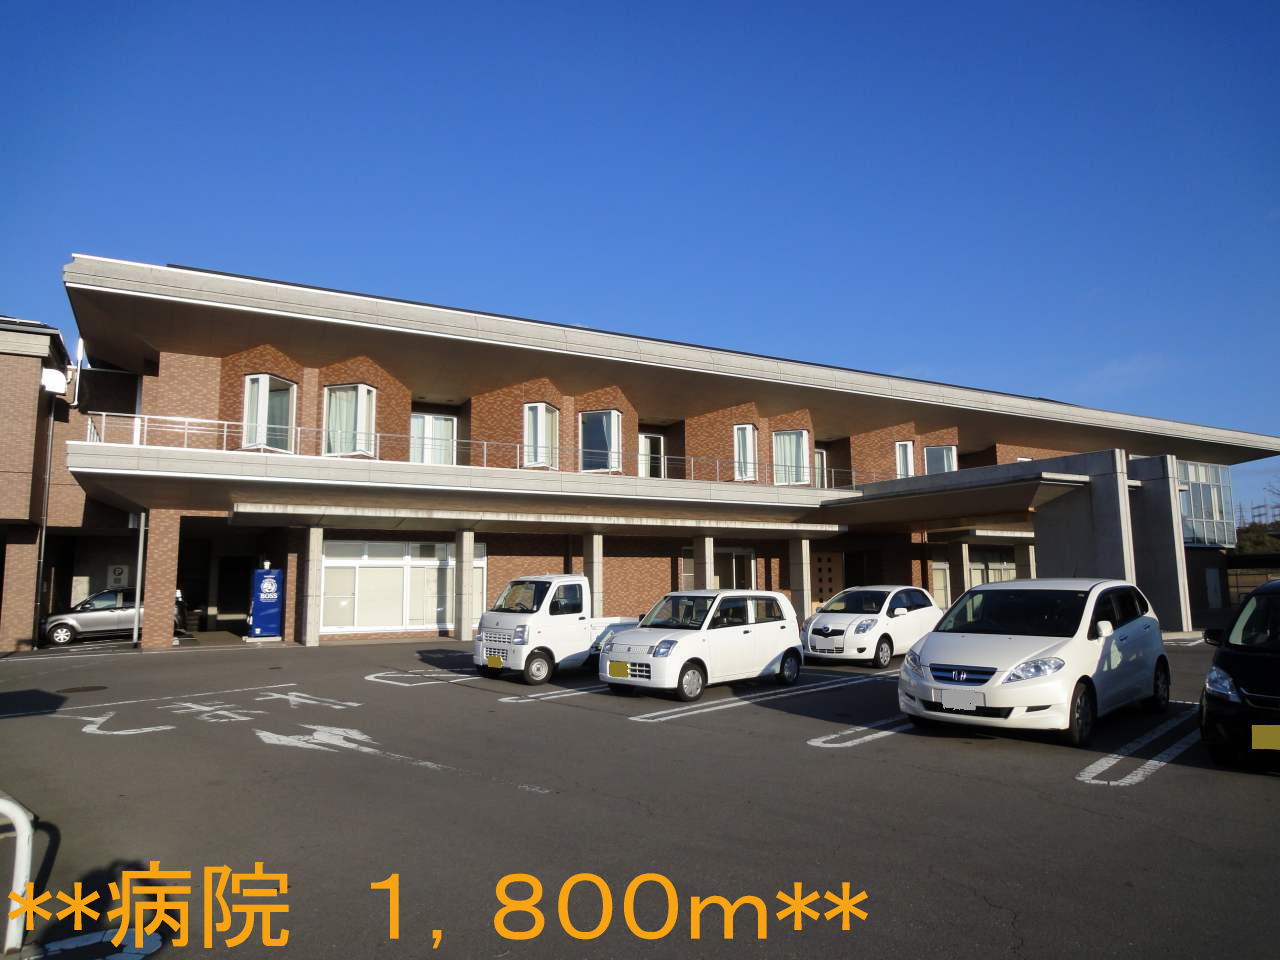 Hospital. Tomi City Hospital (hospital) to 1800m